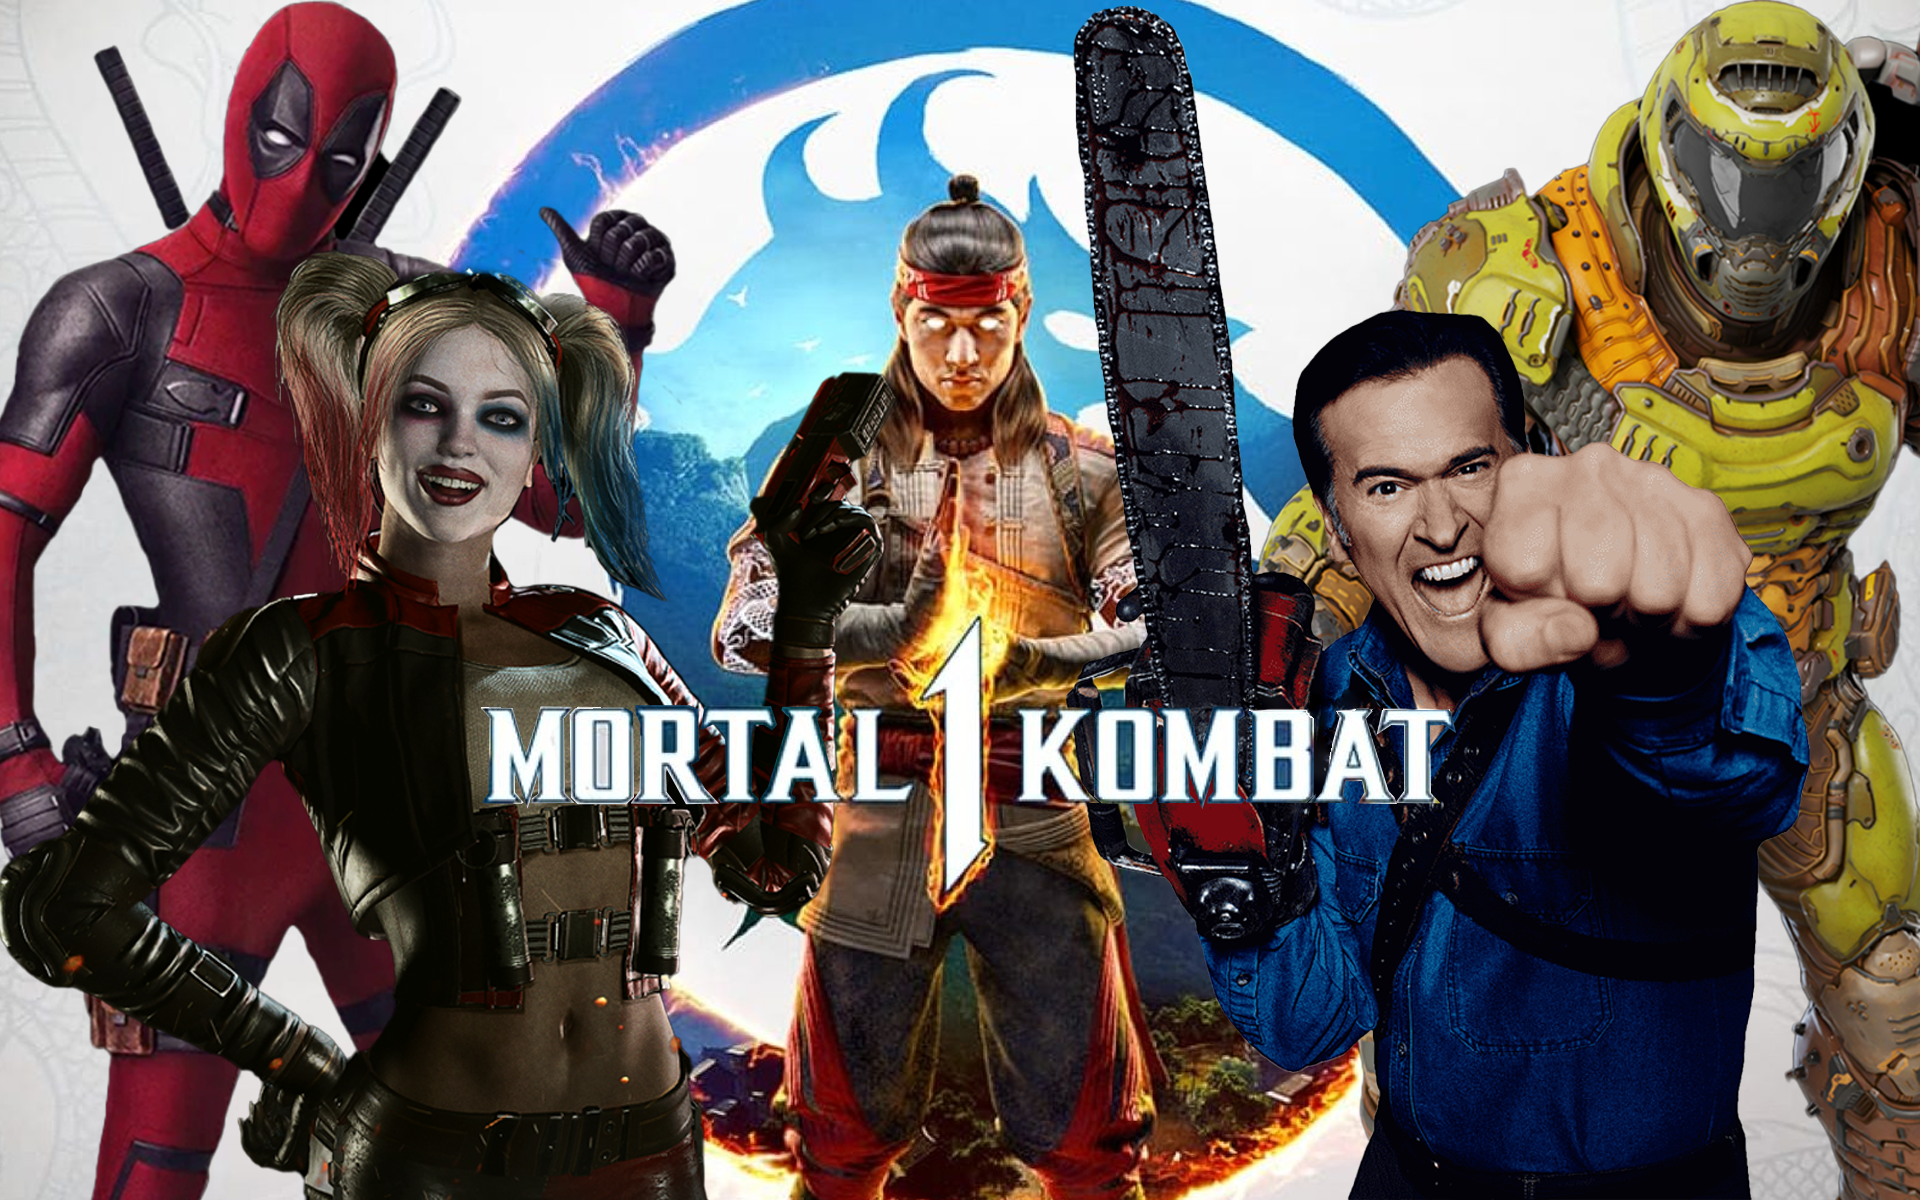 New Mortal Kombat 1 Kombat Pack LEAK is FAKE?! 